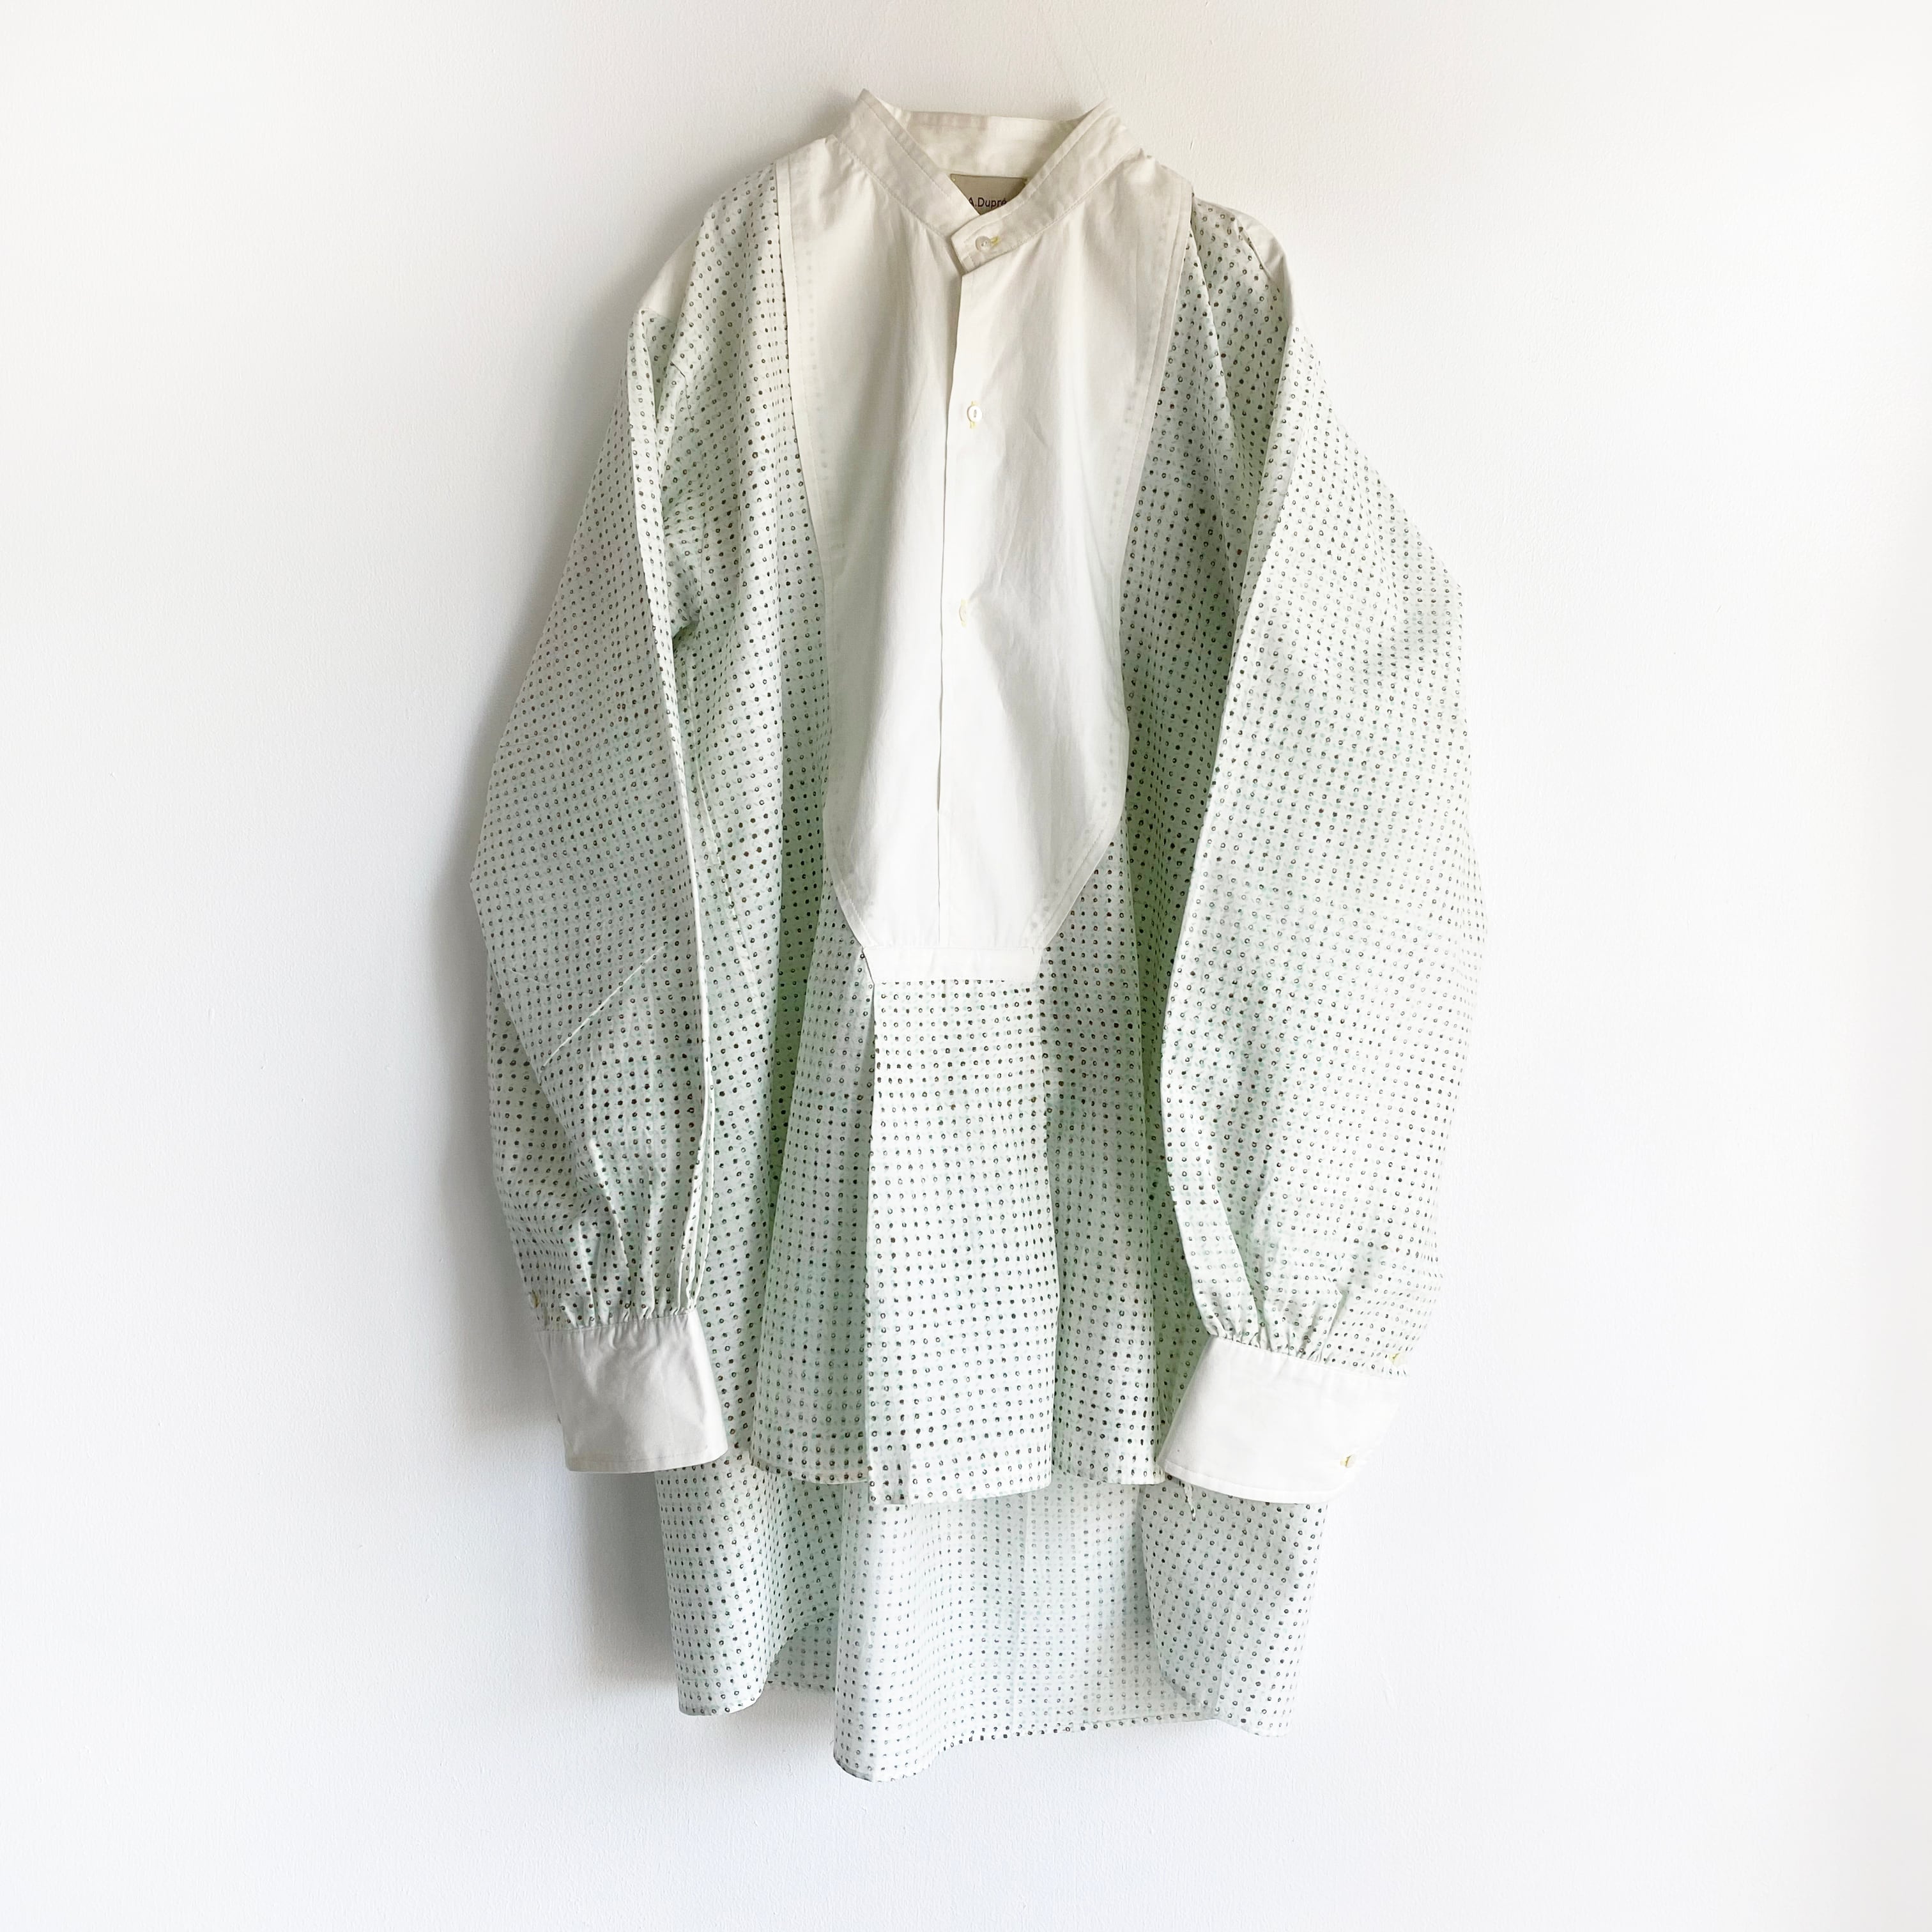 Pullover gather blouse "block print geometric"